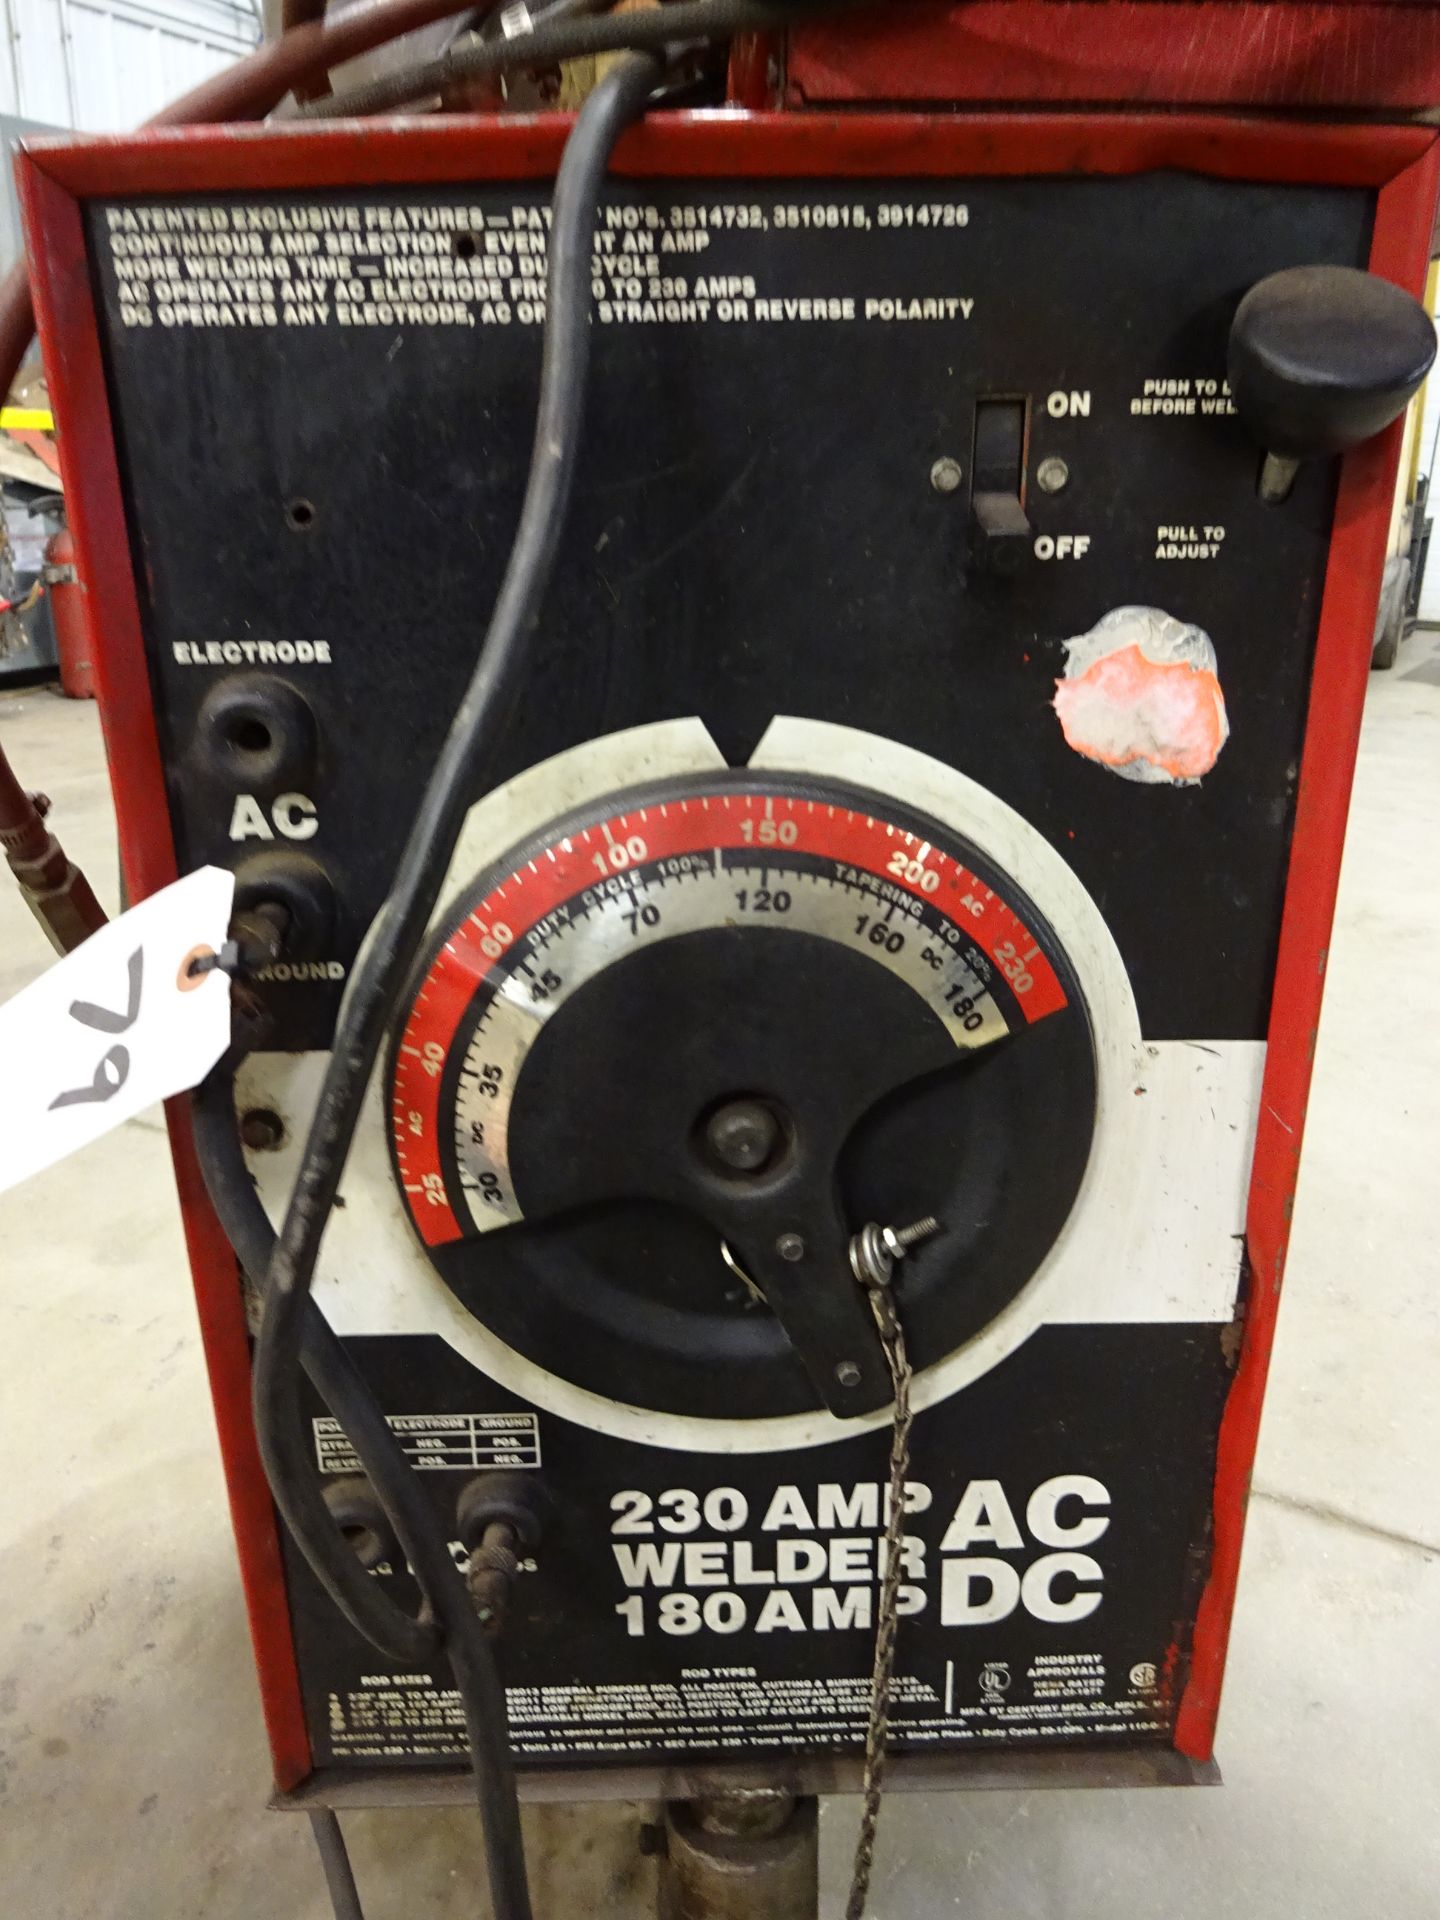 230 AMP/180 AMP AC/DC WELDER - Image 2 of 2